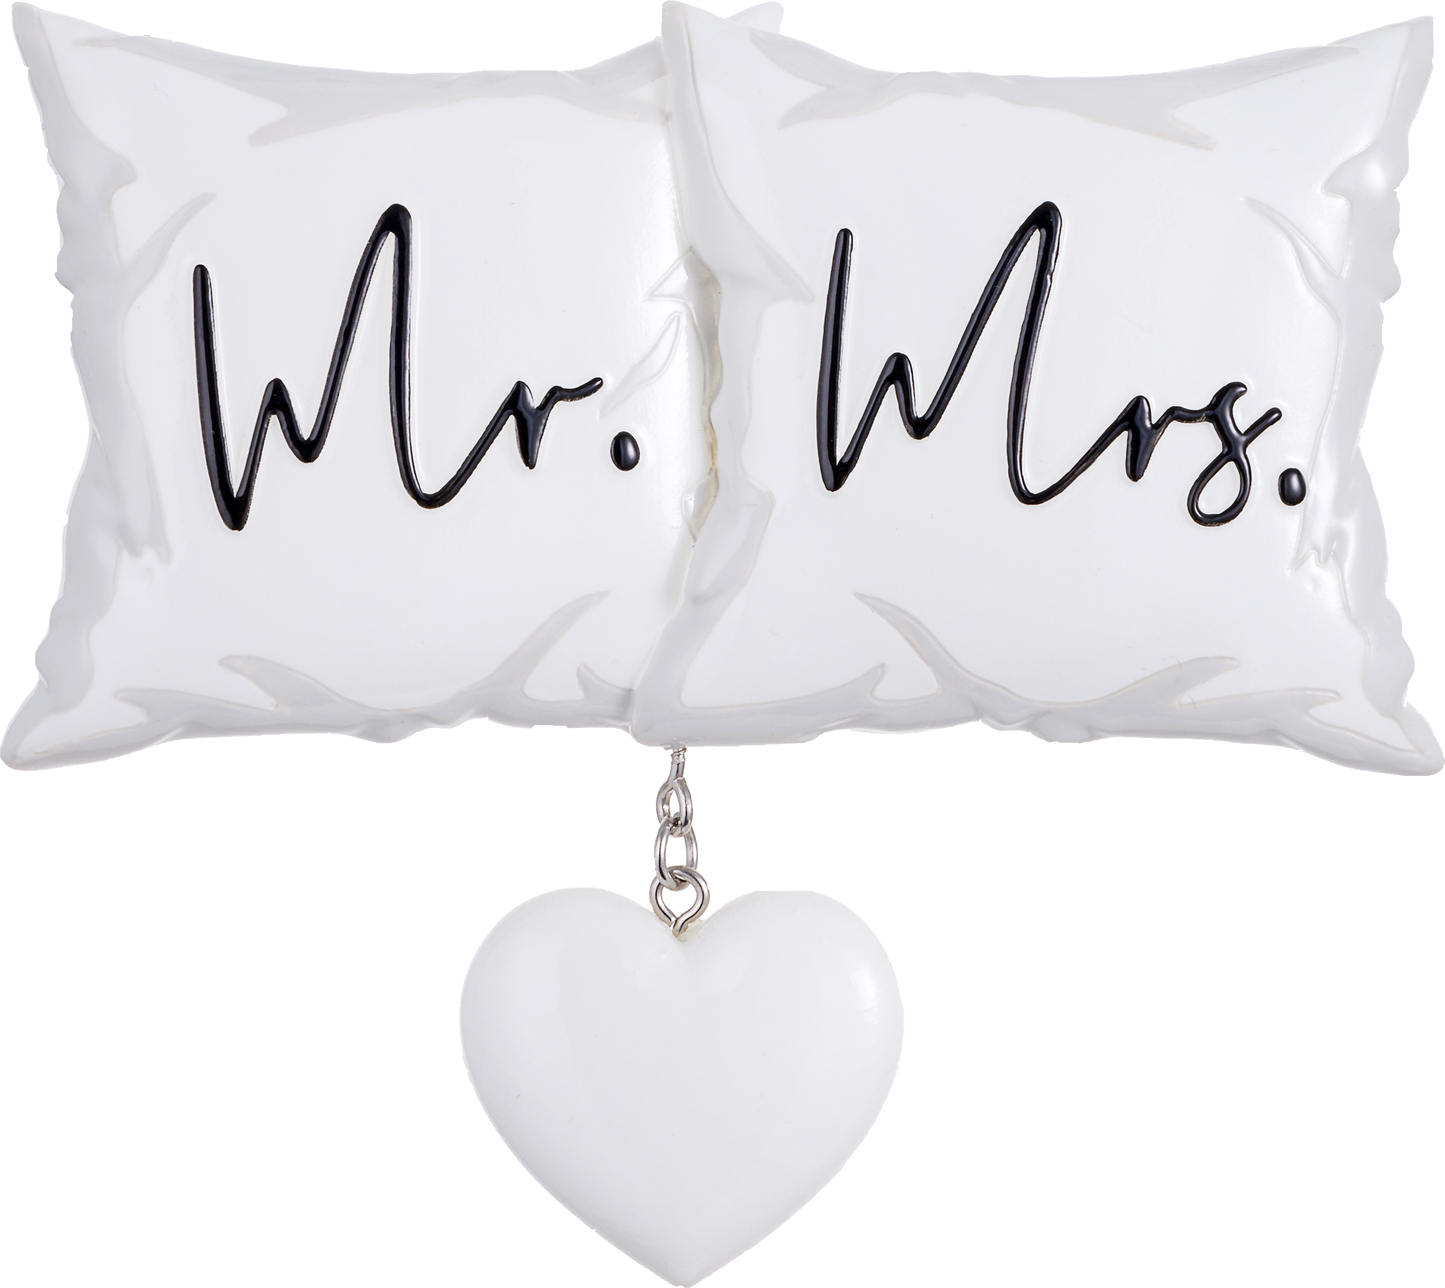 Mr. & Mrs. Pillows Ornament